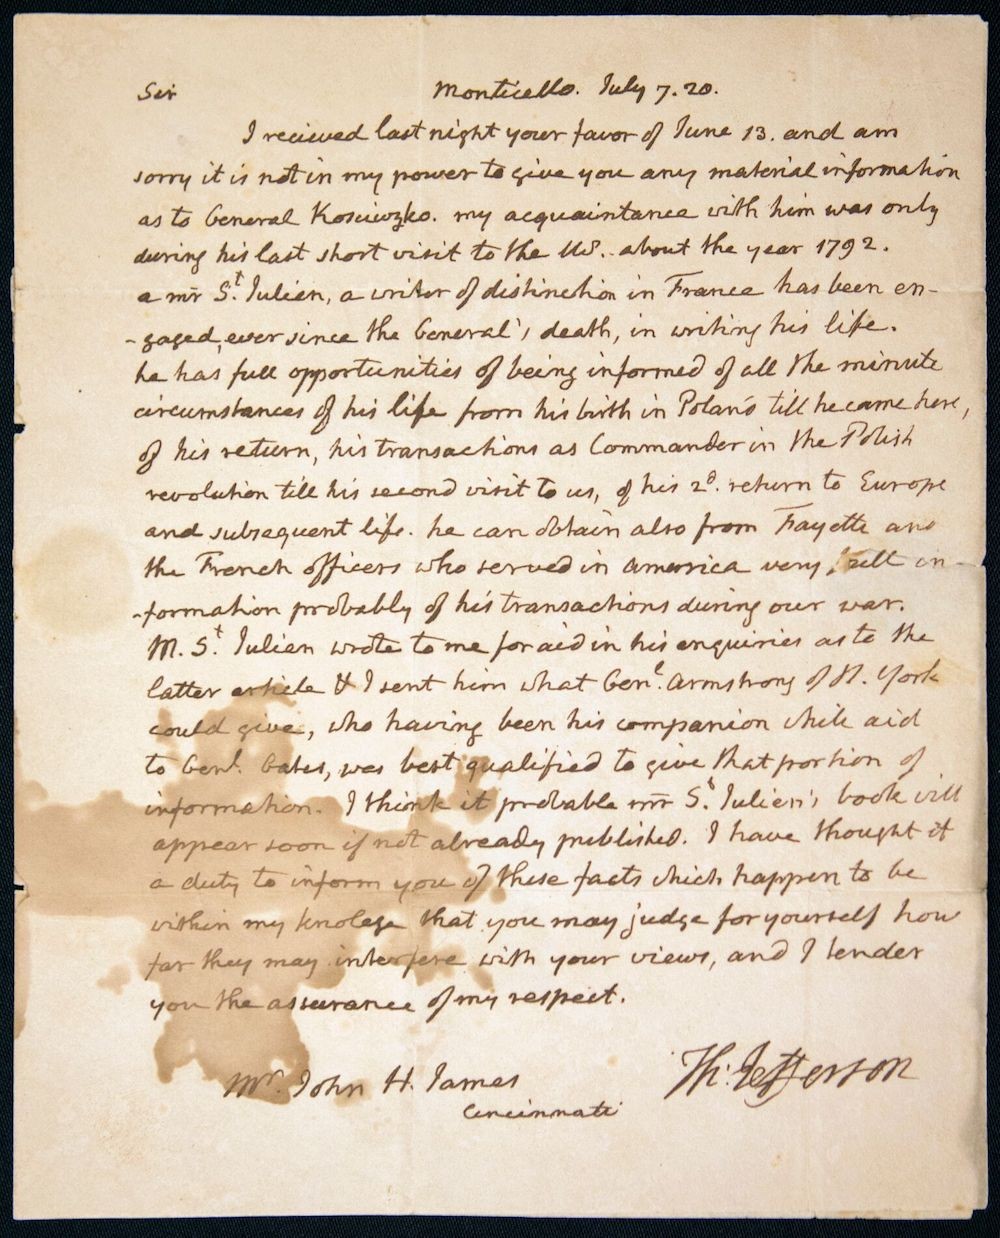 Full handwritten letter from Thomas Jefferson to James